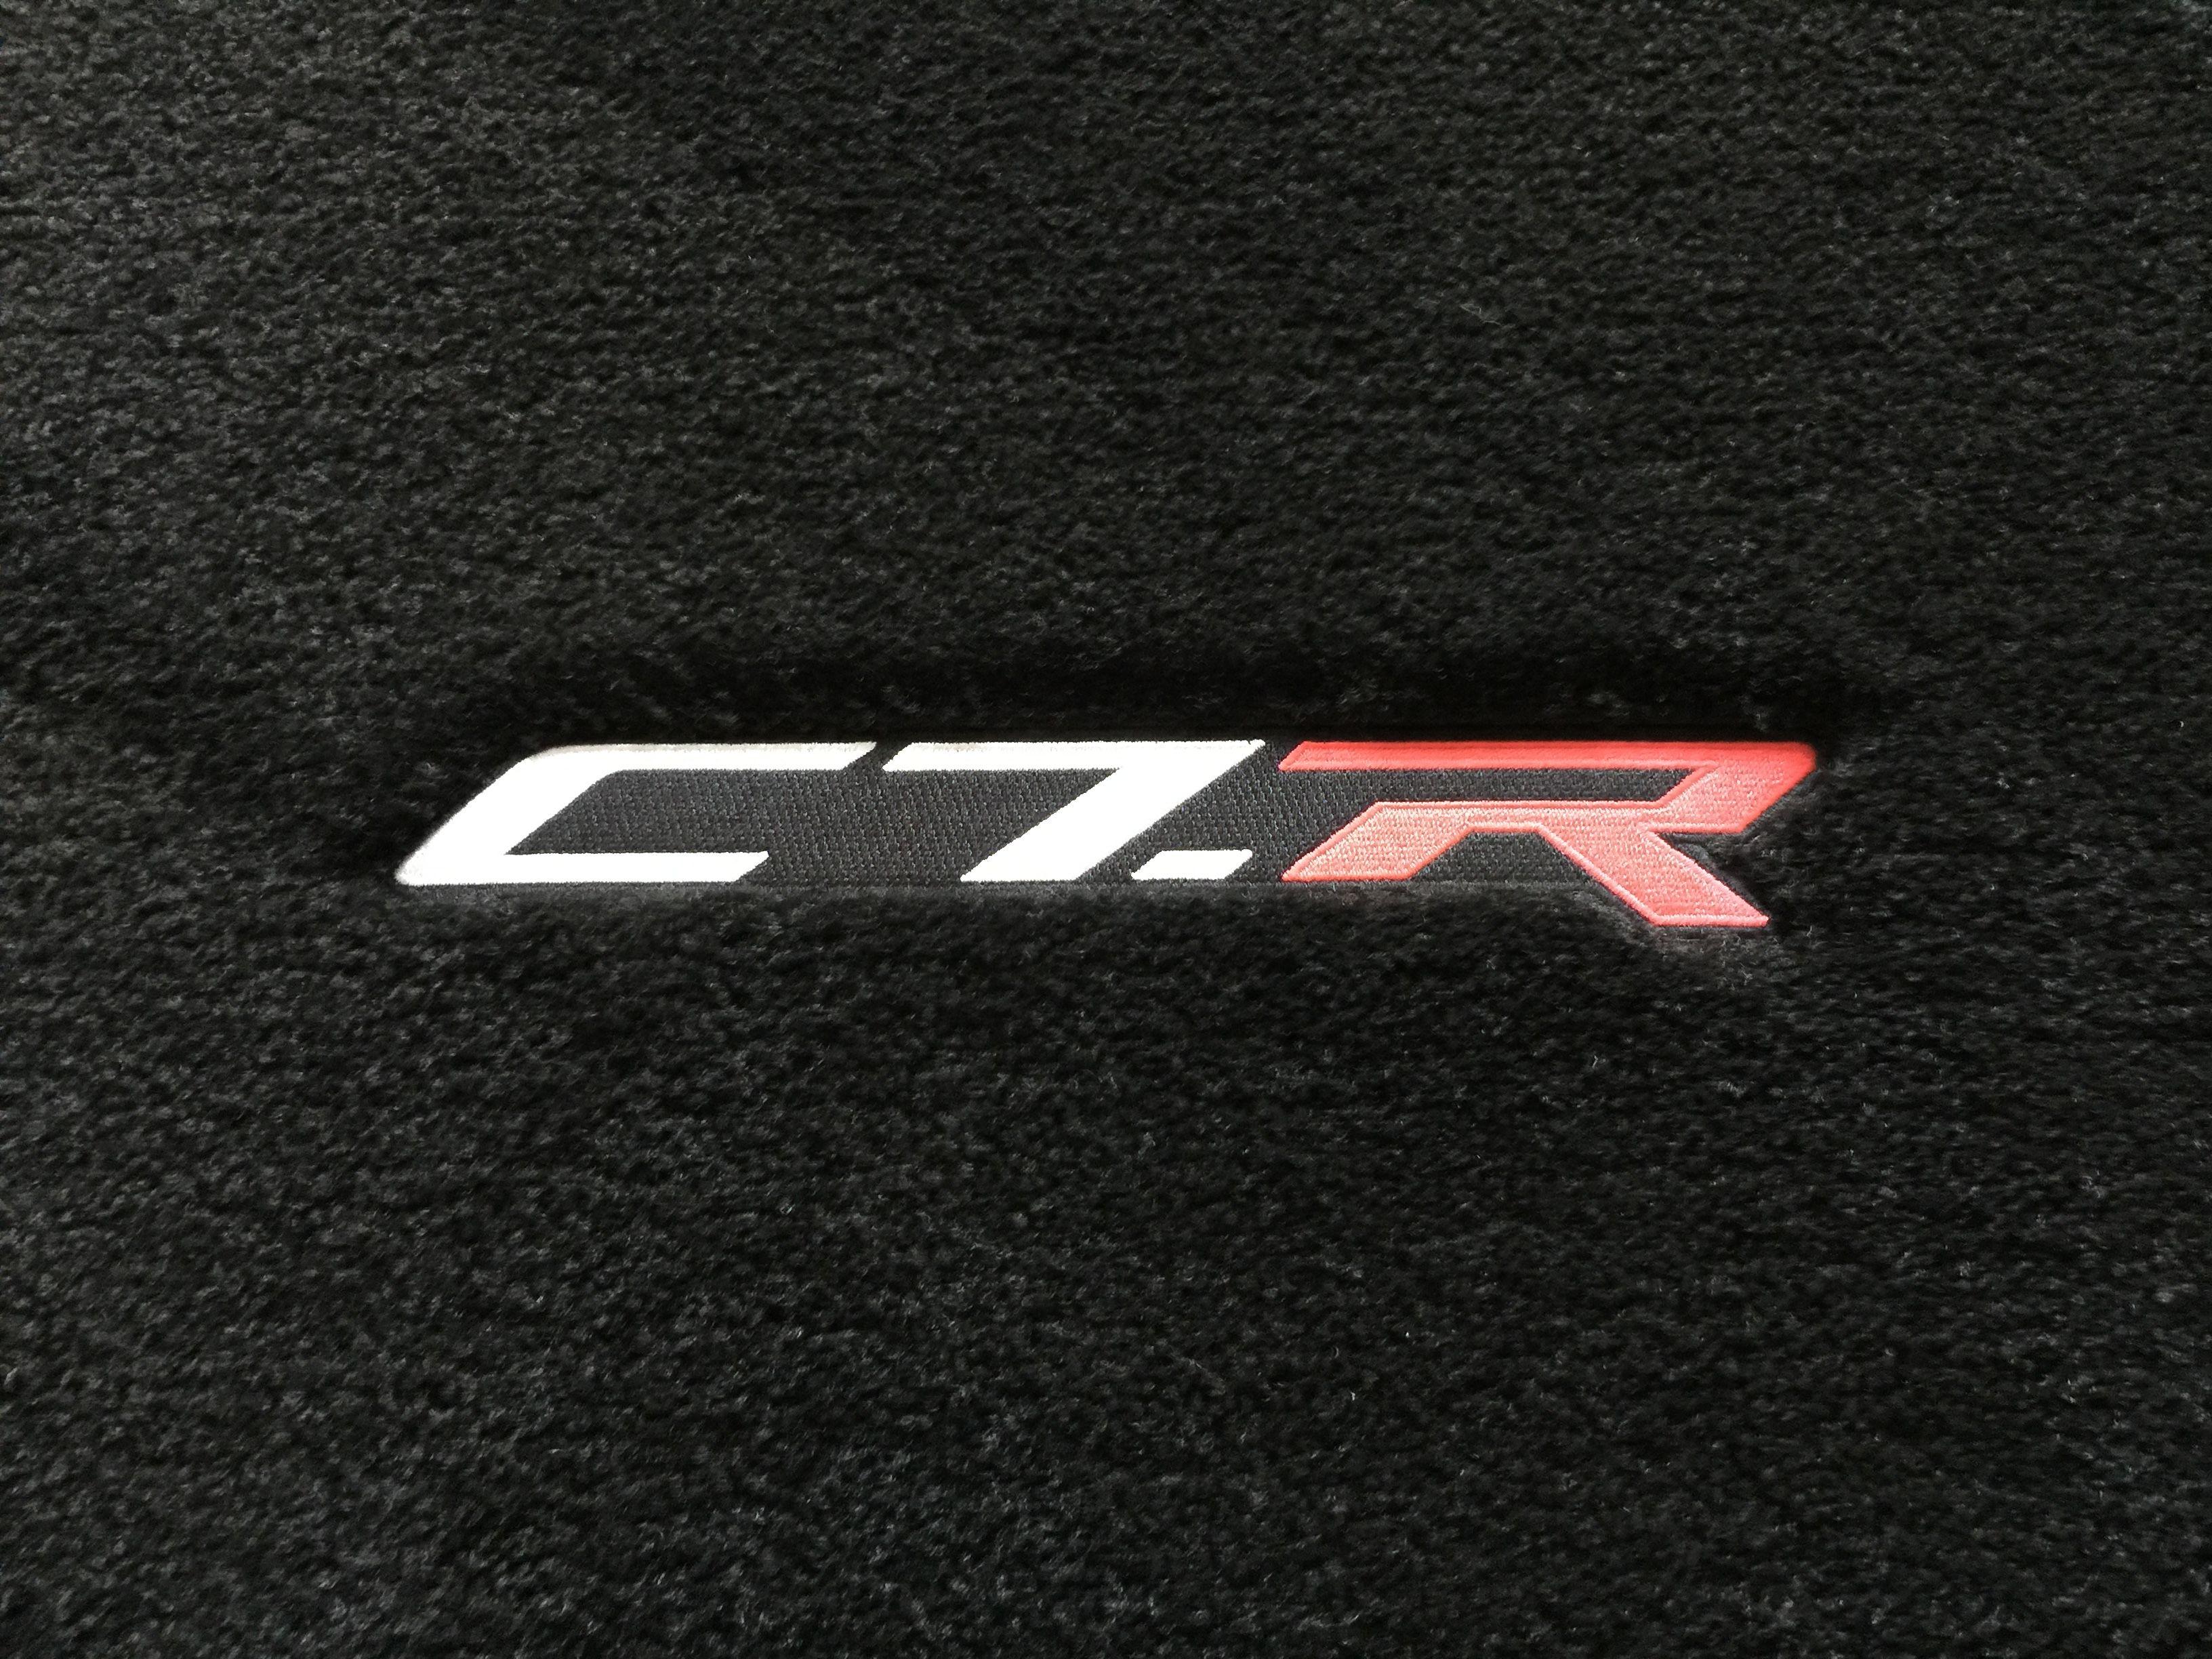 C7.r Logo - FS (For Sale) Lloyd's luxe black cargo mat - 'C7.R' logo ...